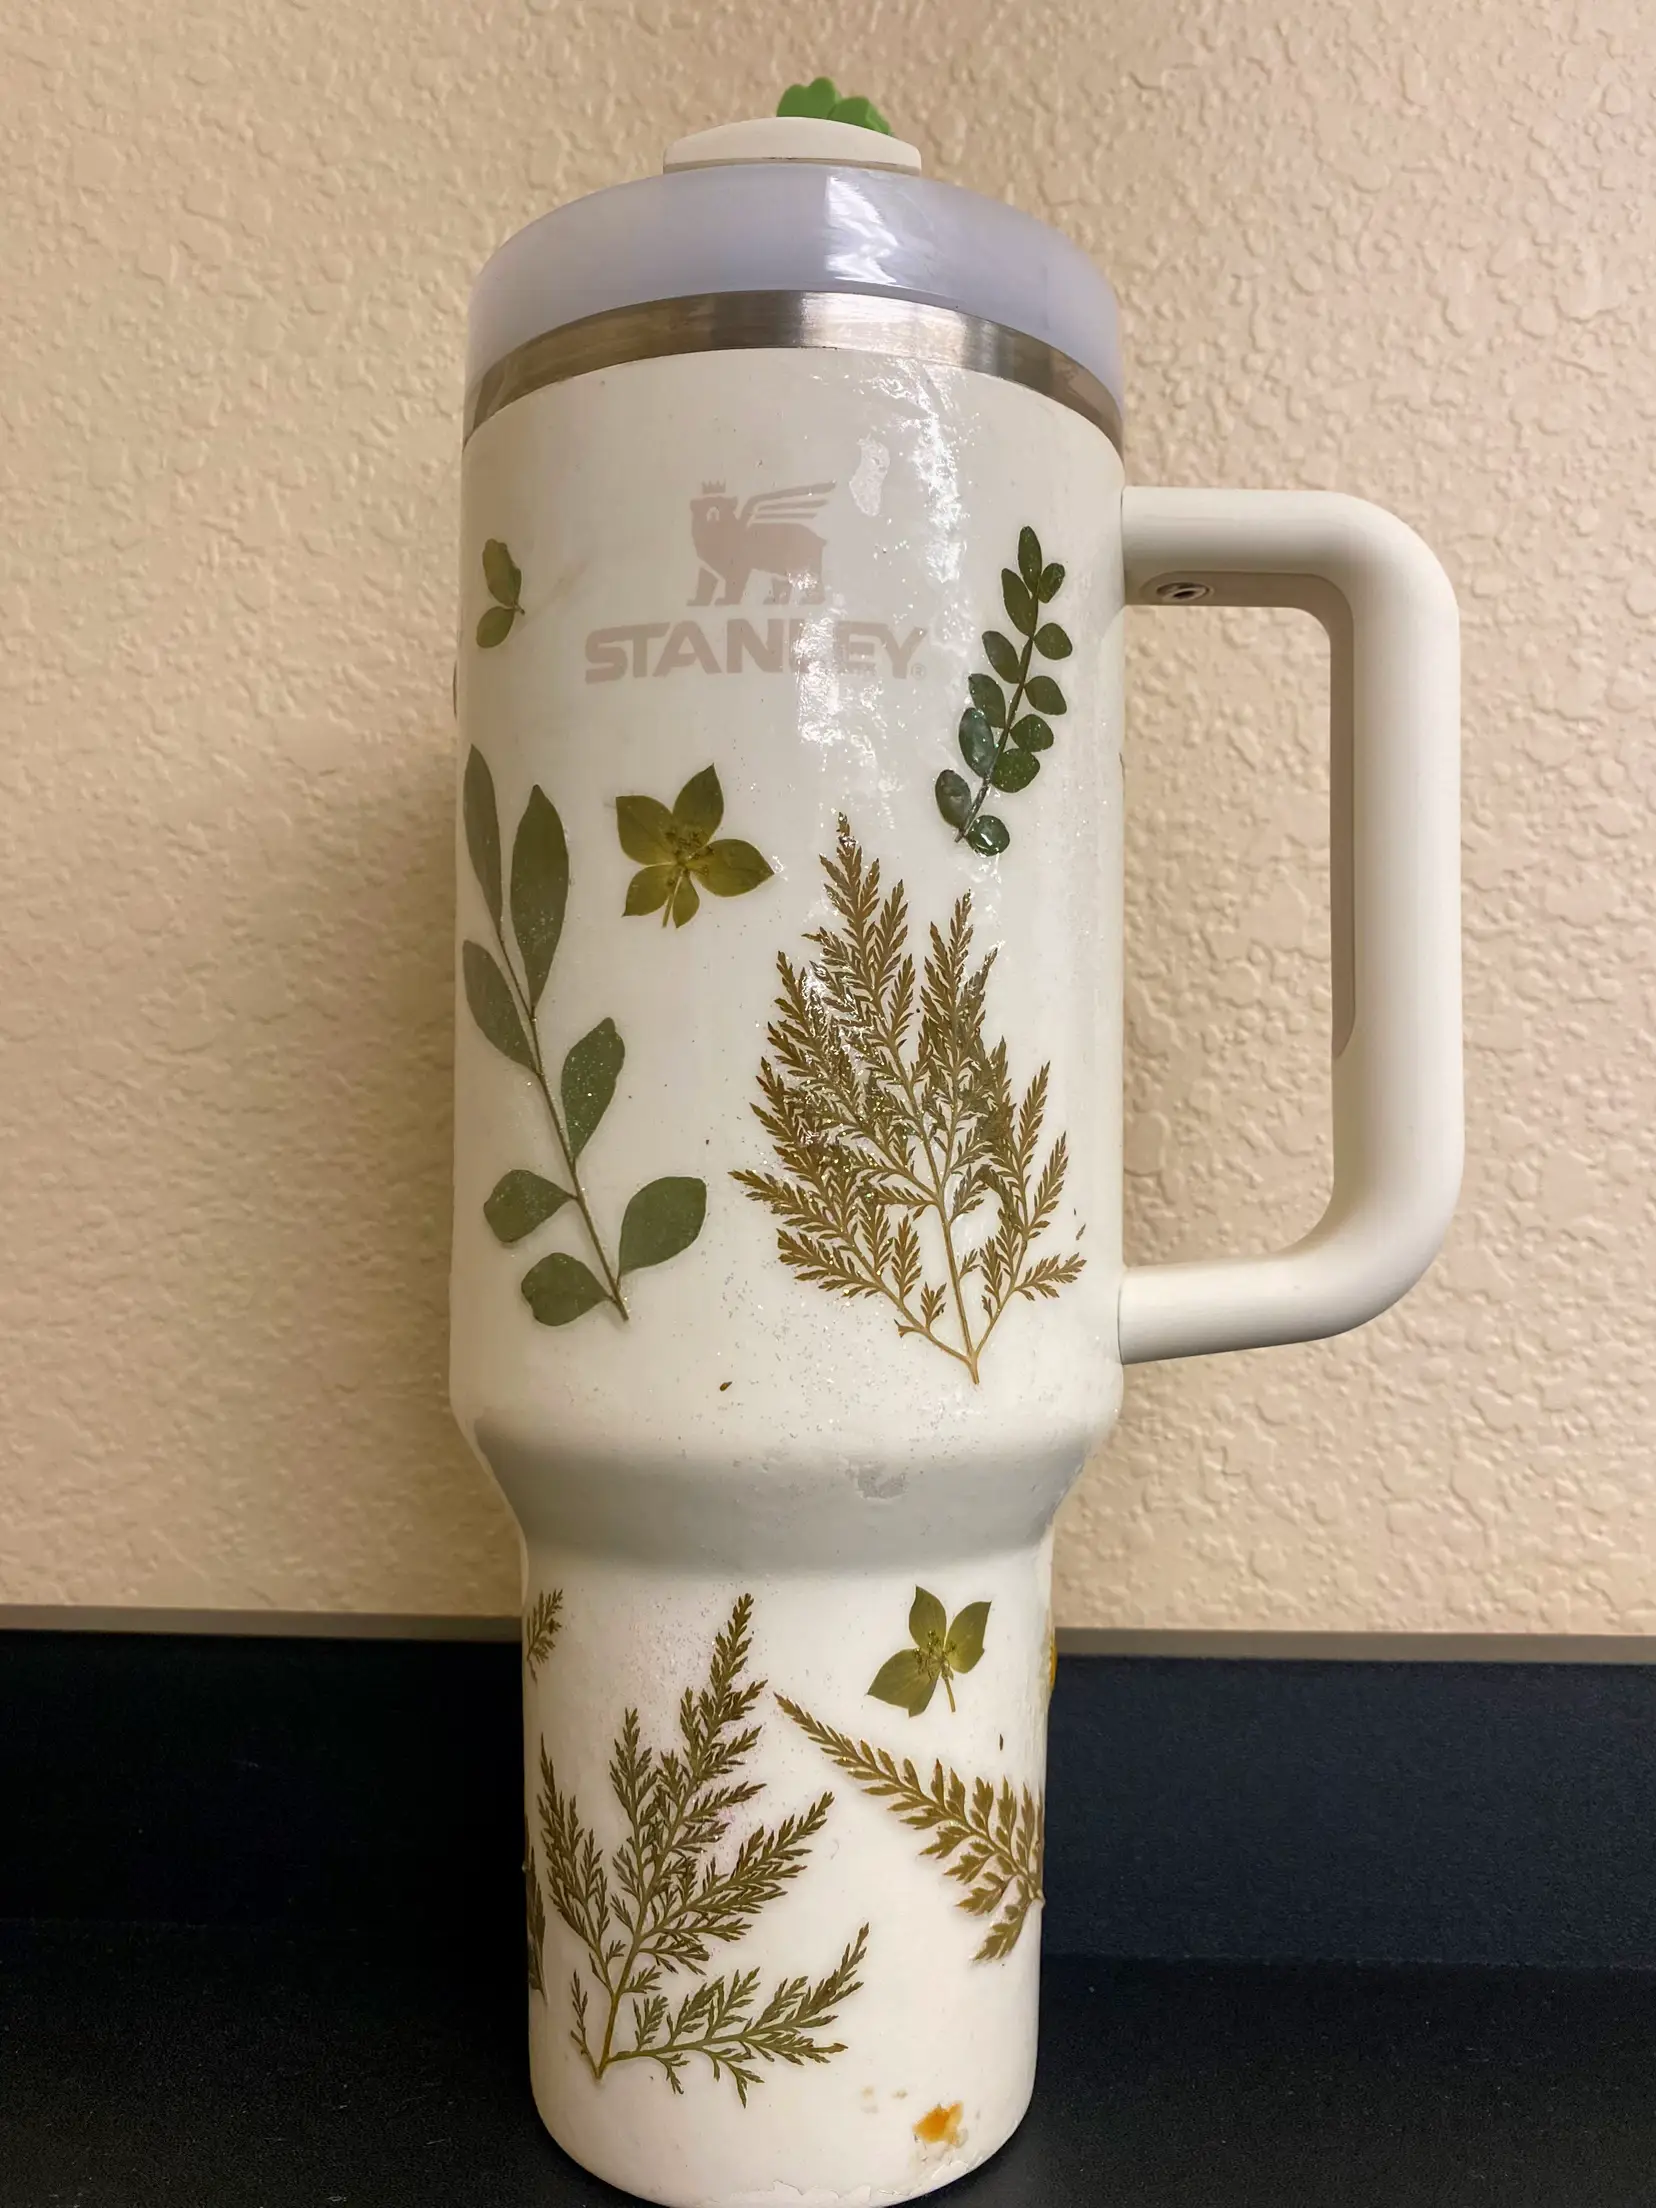 Custom monogram on Stanley cups!, Gallery posted by avenuej_tx